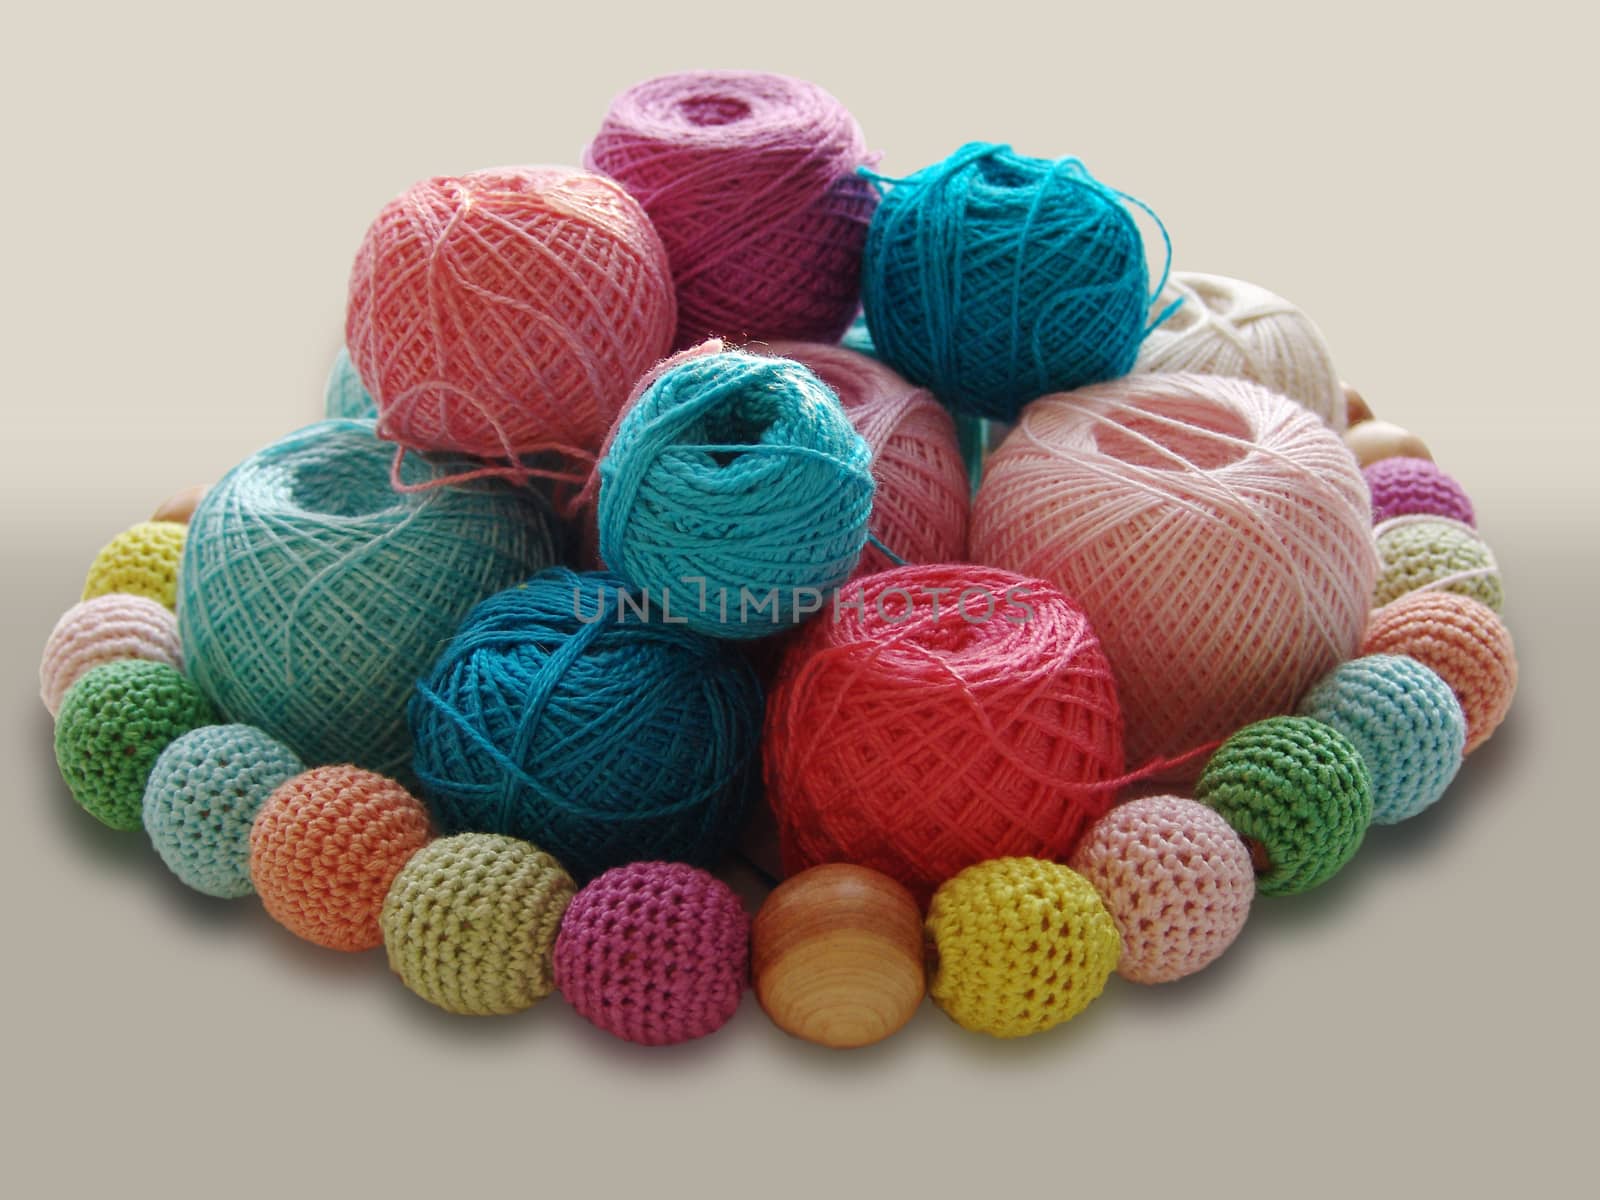 ingering yarn, various shades of pastel  colors by elena_vz